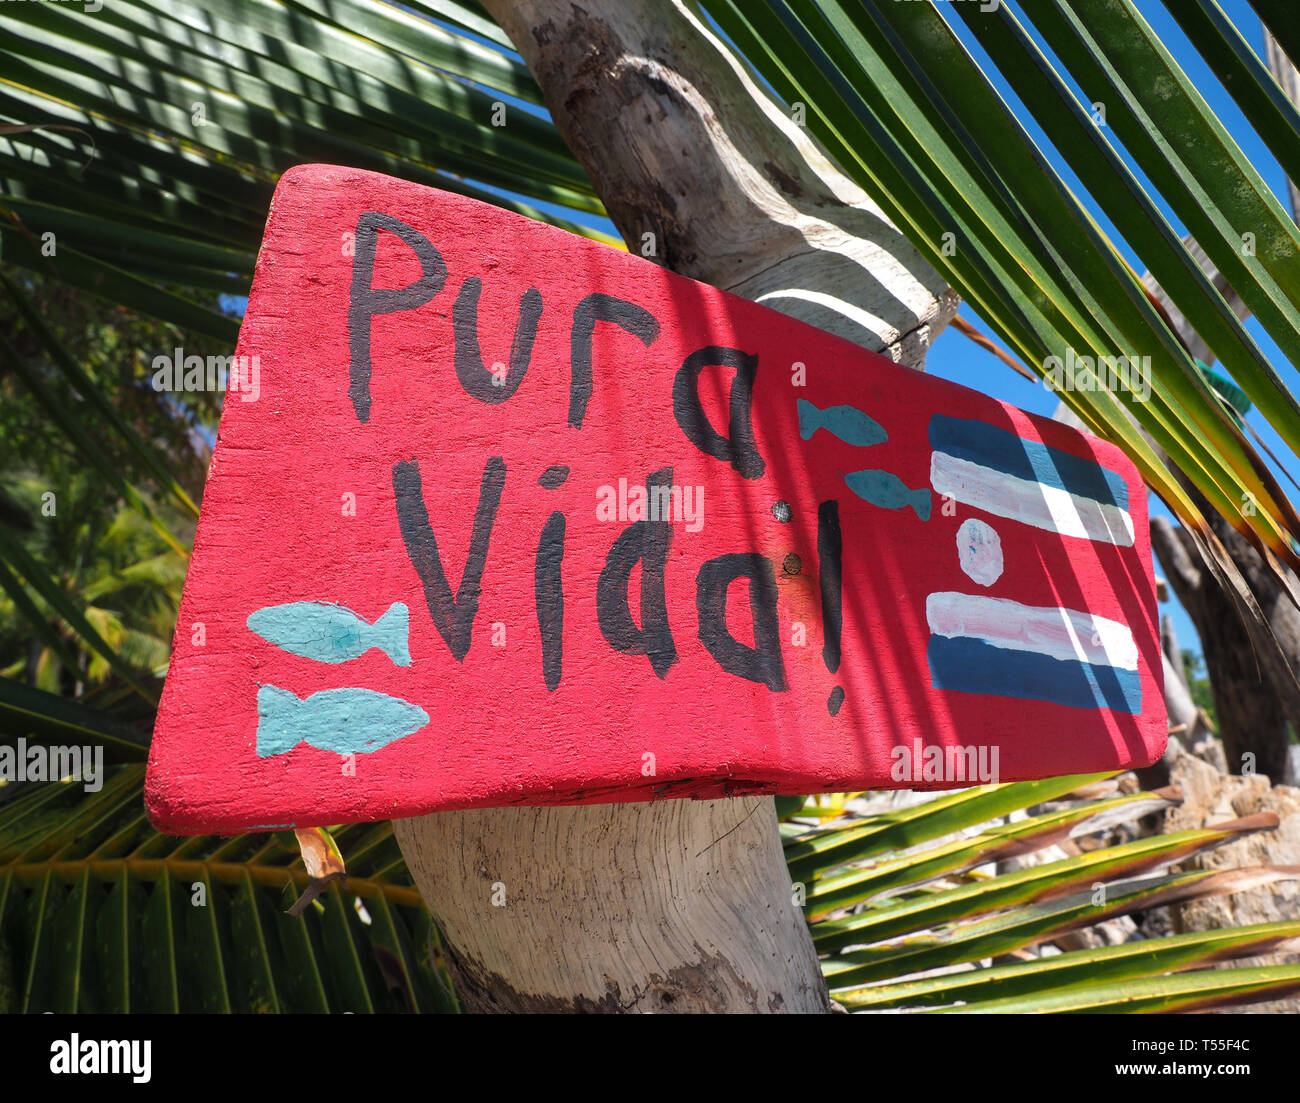 Pura Vida, beach sign, Montezuma, Costa Rica, 2019 Stock Photo